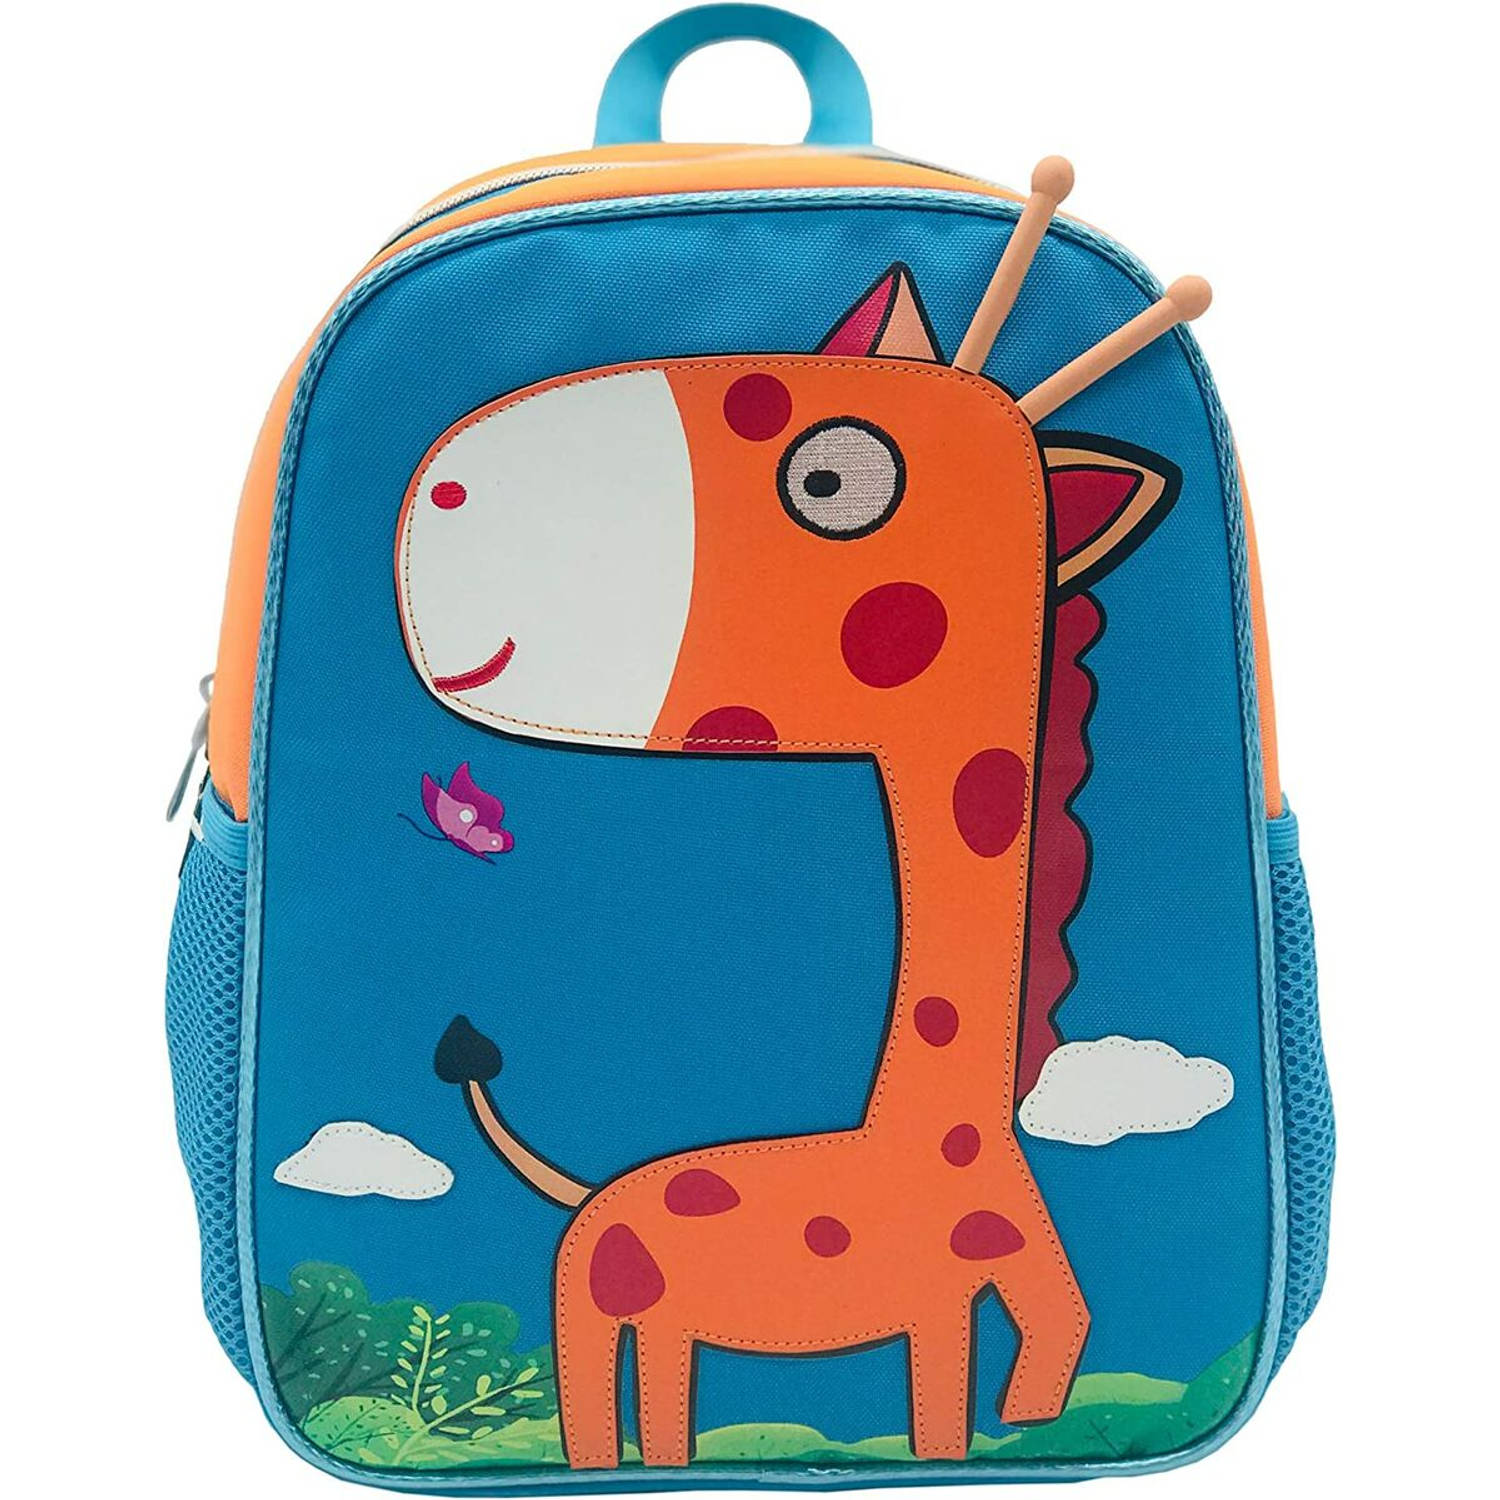 Schoolrugzak Toybags Blauw Giraf (25 x 30 x 10 cm)